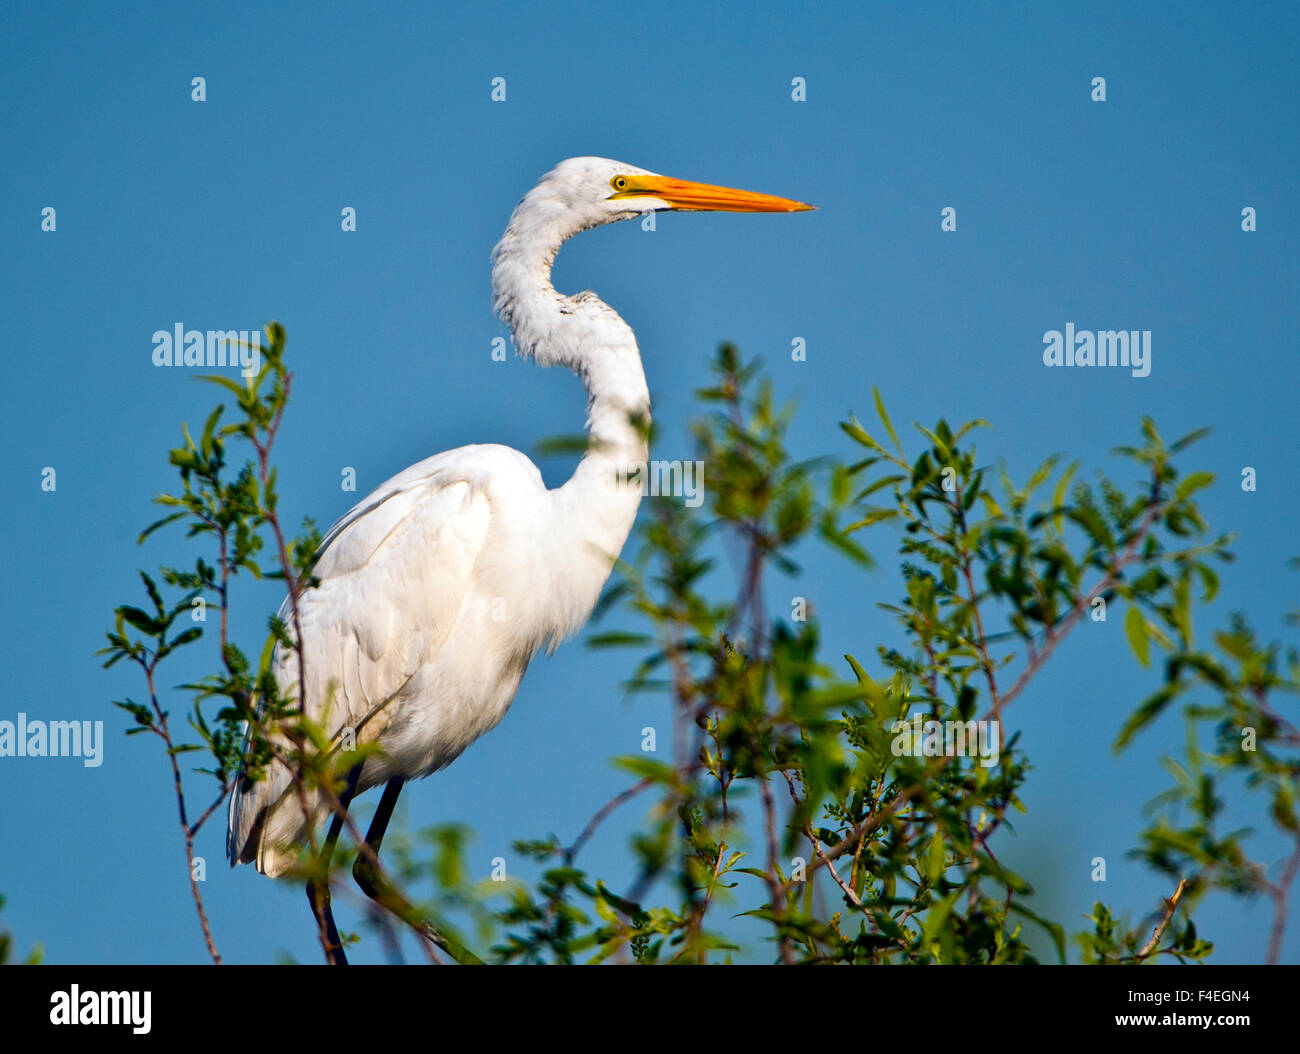 Florida, Venice, Audubon Sanctuary, Endangered Great White Heron Stock Photo